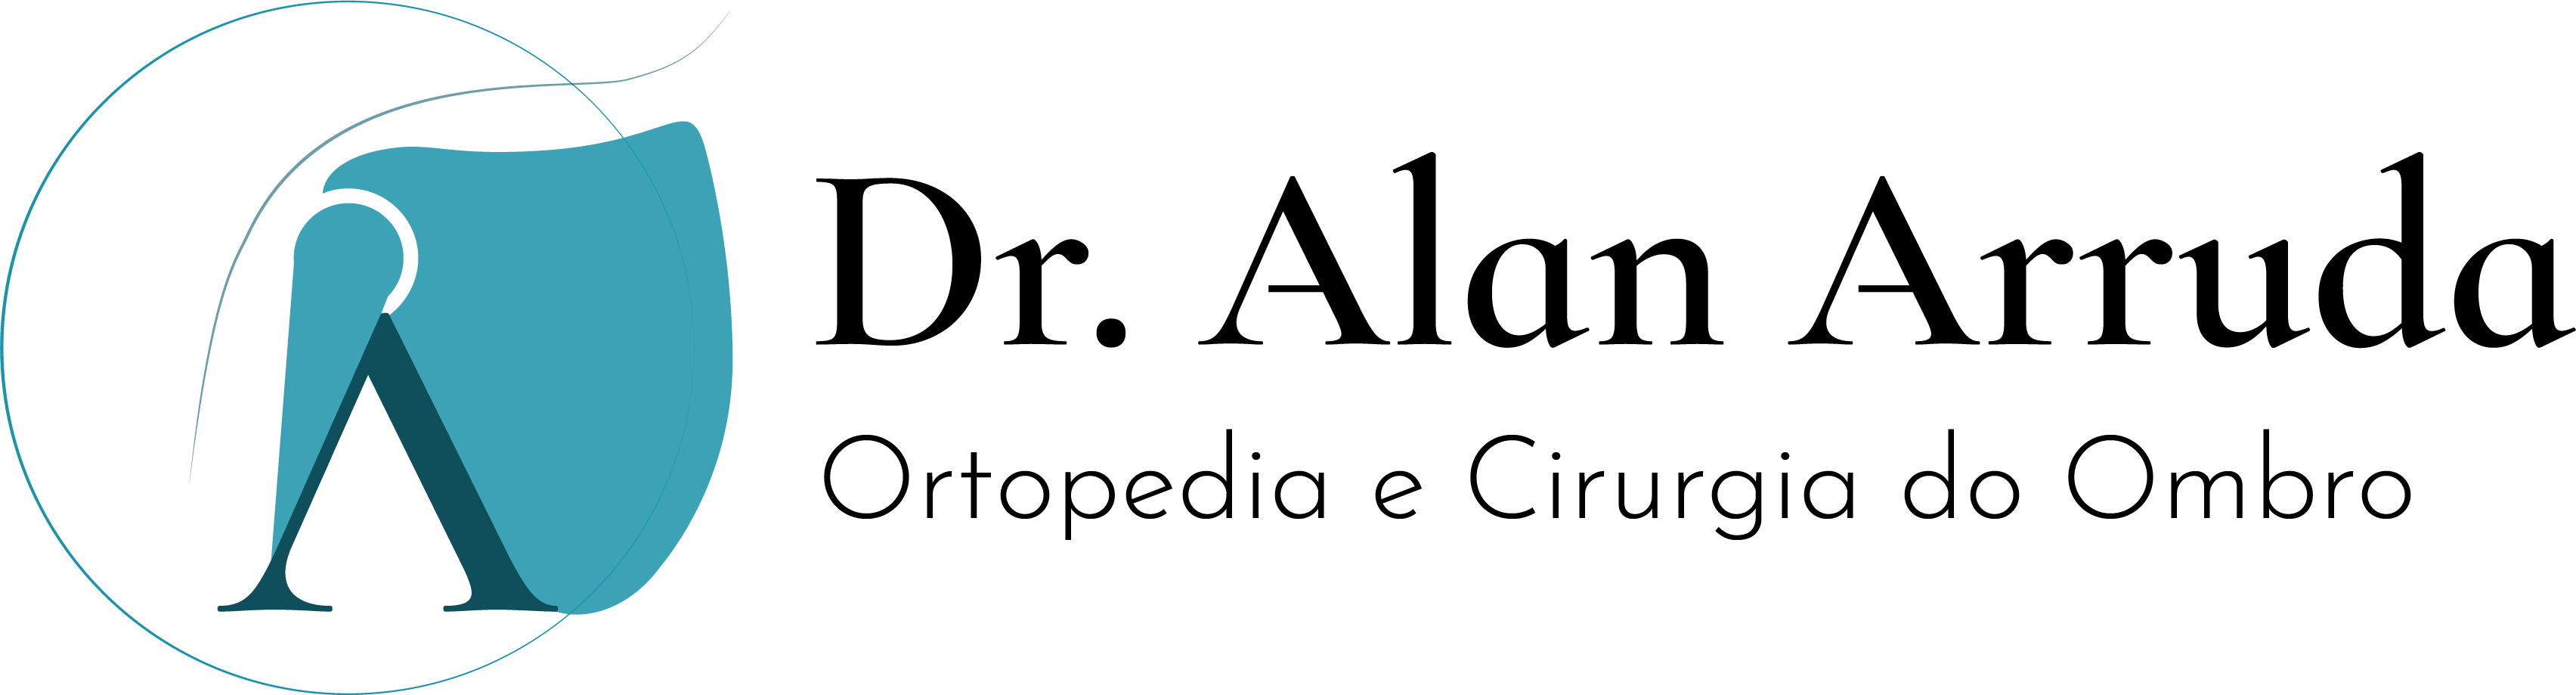 Dr. Alan Arruda